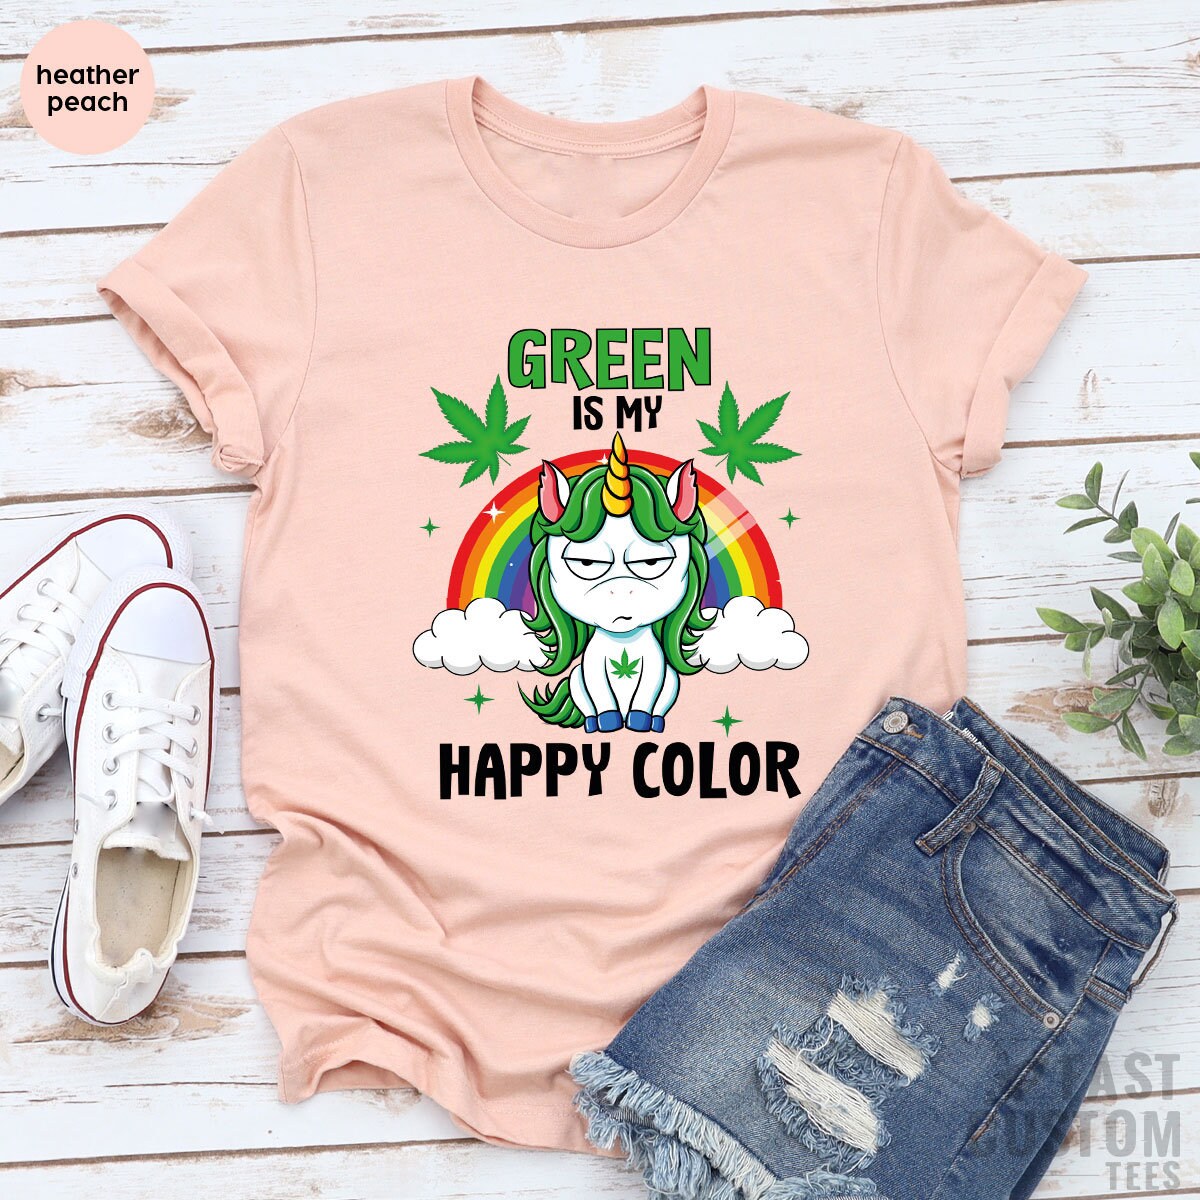 Weed Shirt, Cannabis Shirt, Green Is My Happy Color Shirt, Marijuana T-Shirt, Unicorn Shirt, Rainbow Shirt, Gift For Weed Lover, Pothead Tee - Fastdeliverytees.com